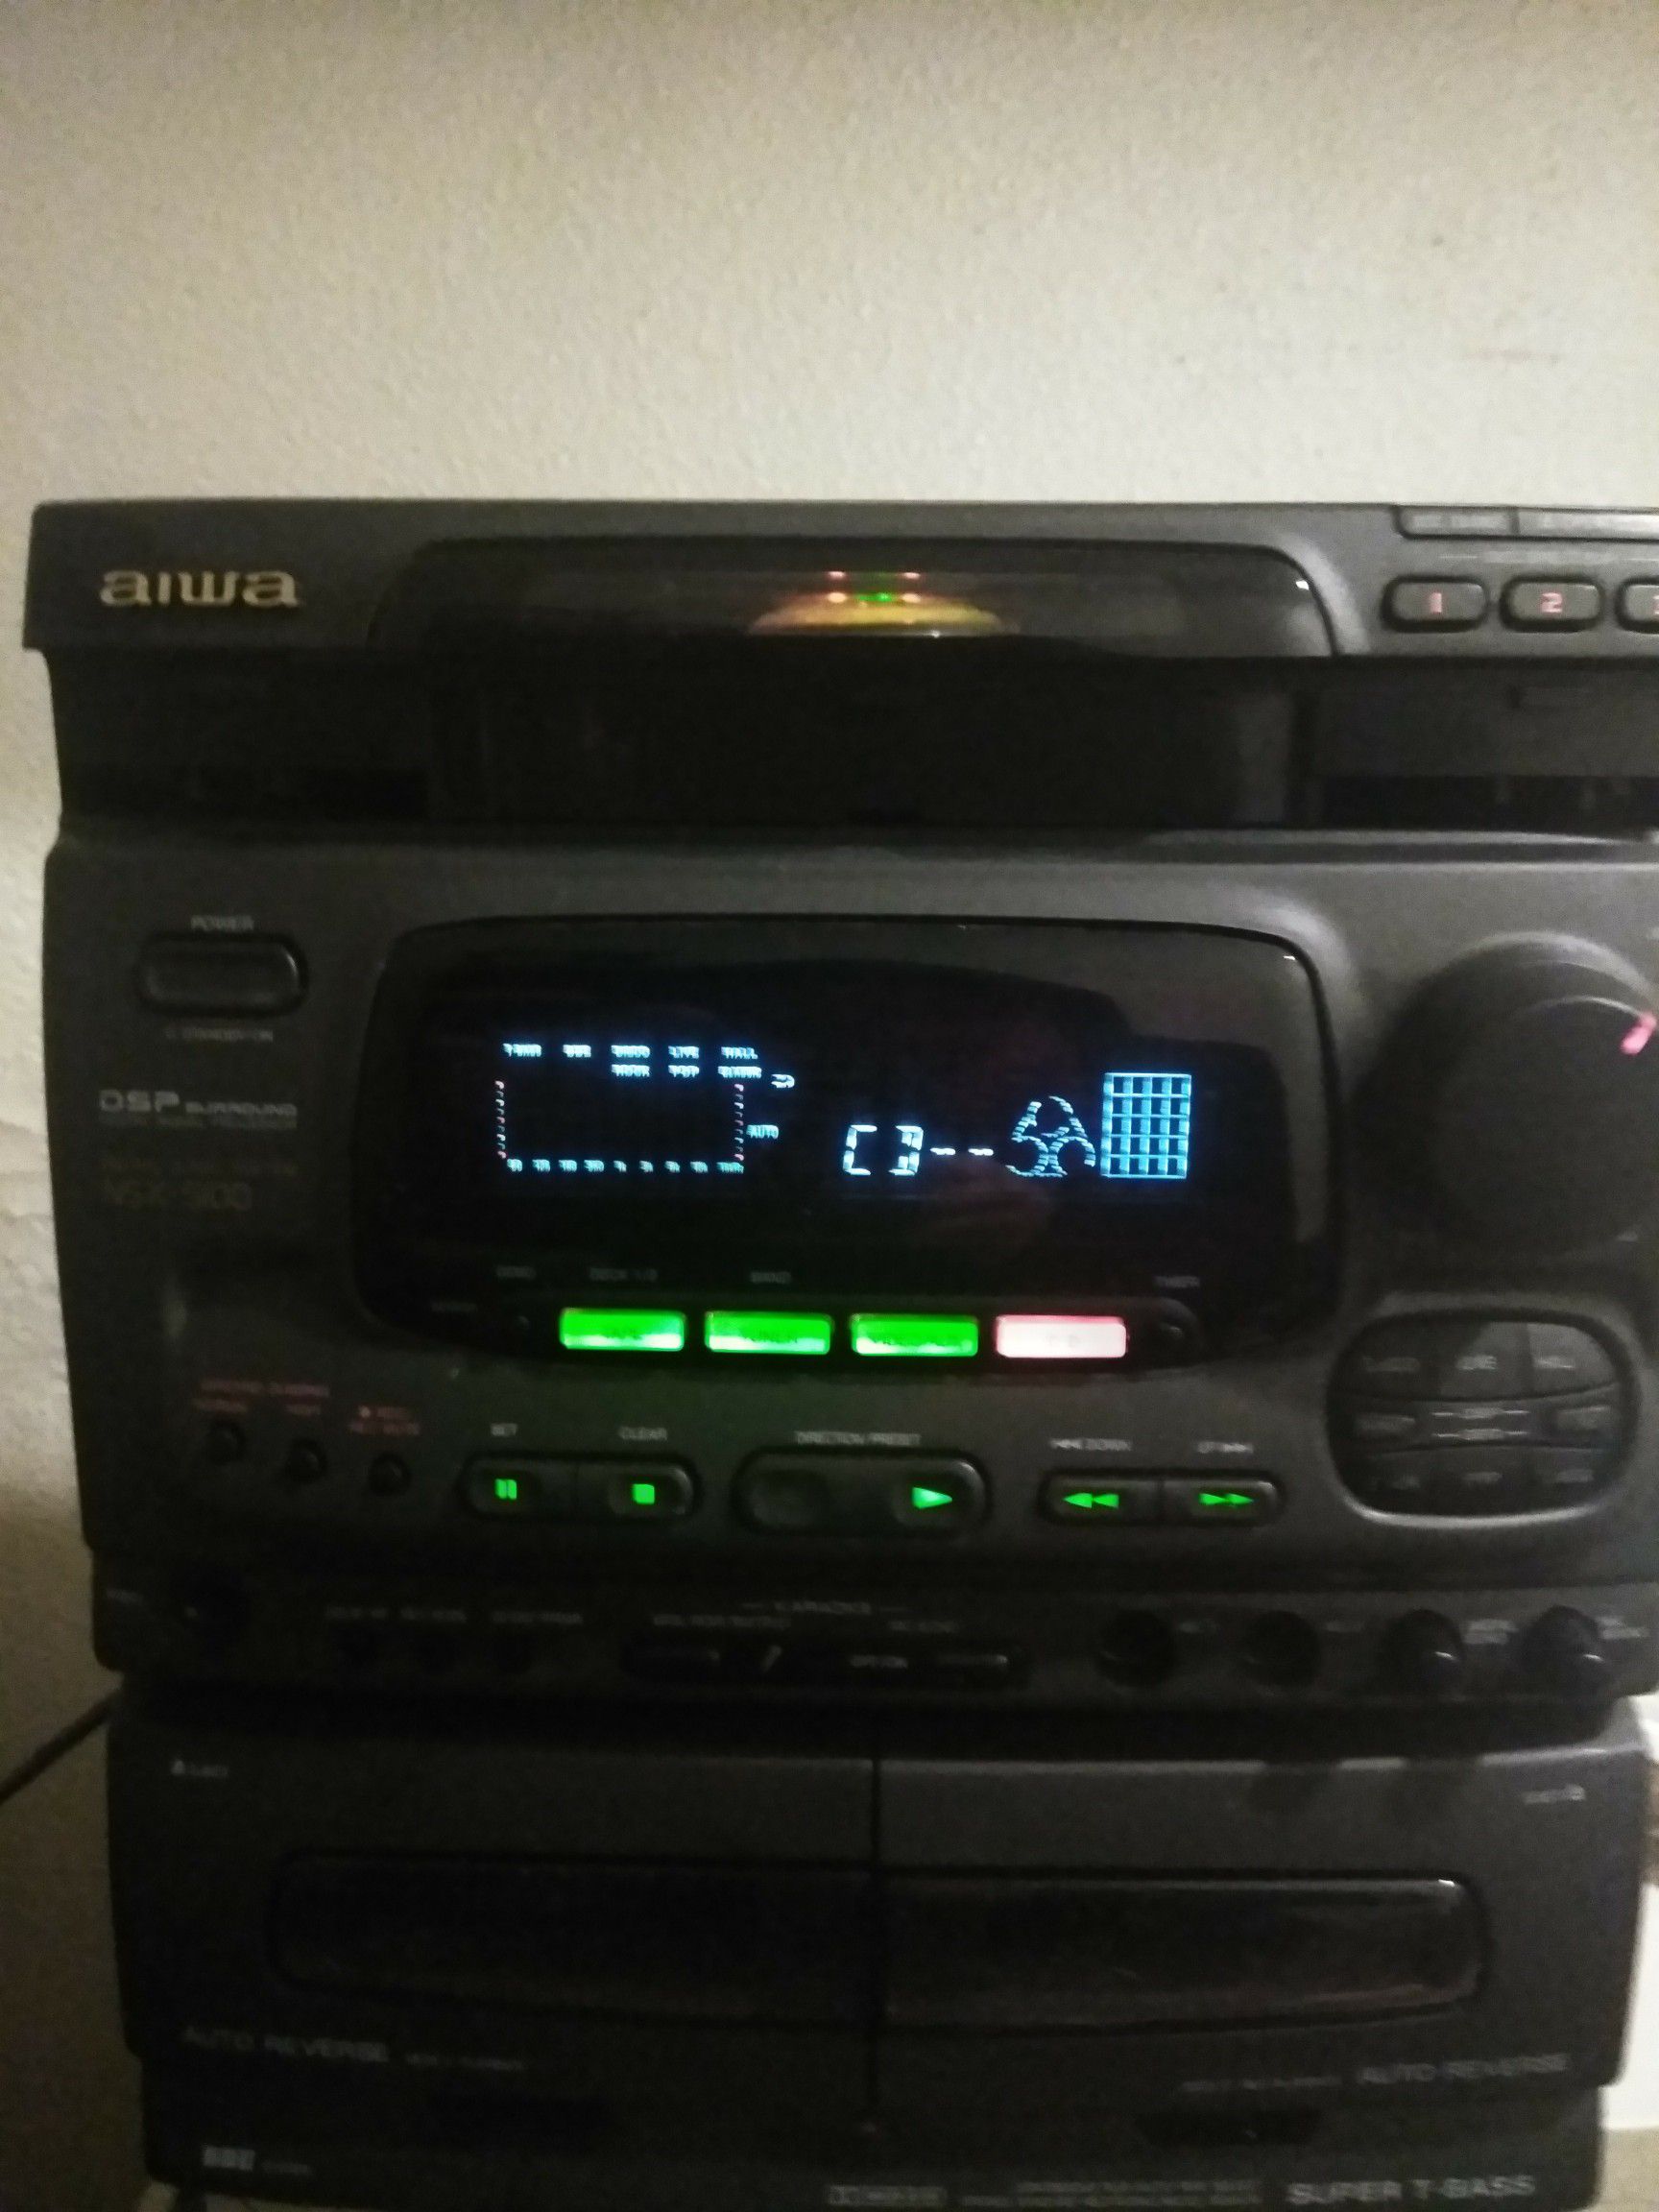 Aiwa stereo receiver